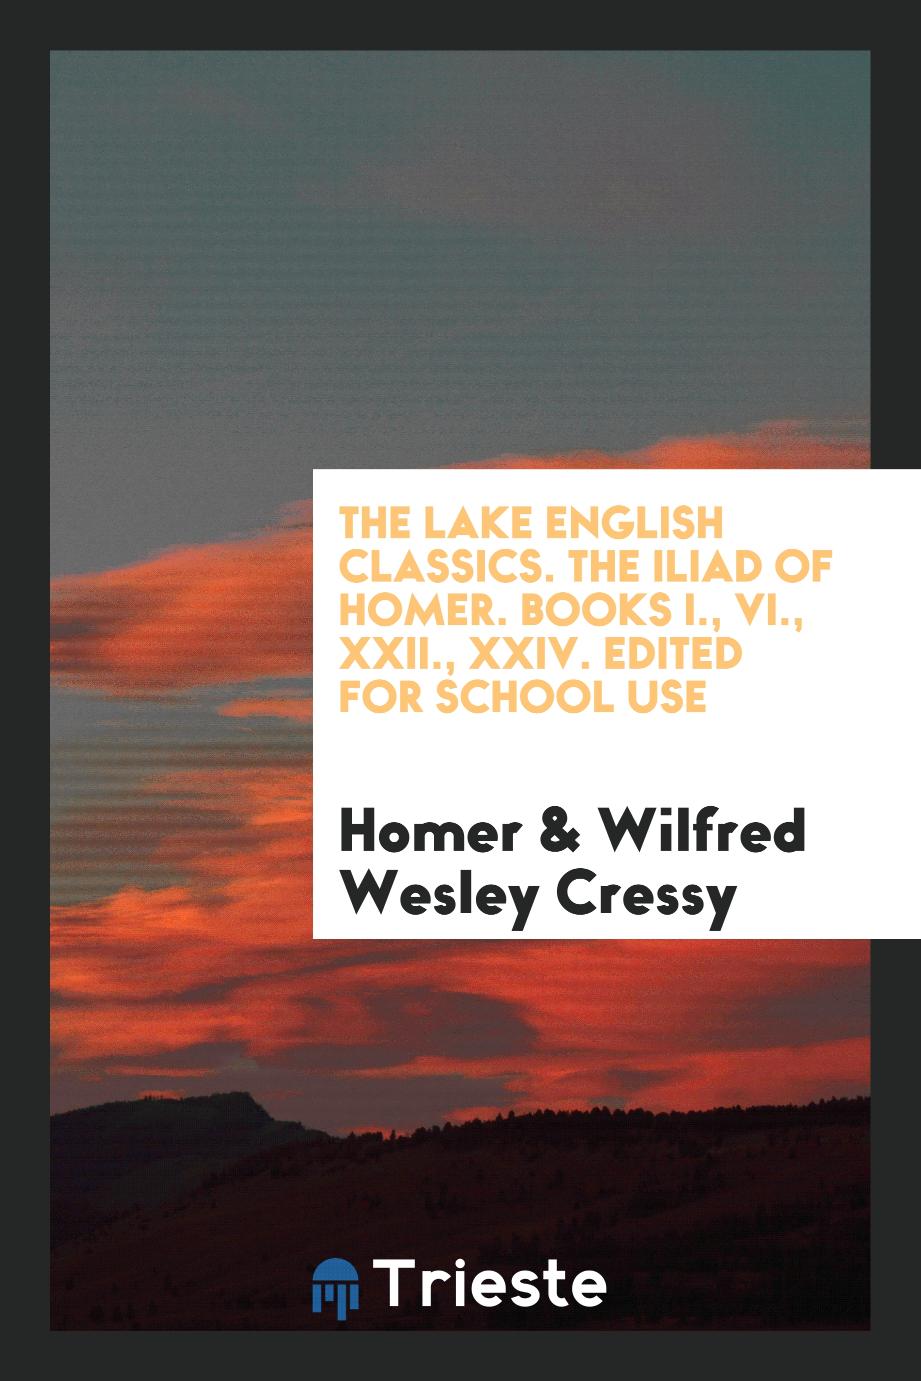 The Lake English Classics. The Iliad of Homer. Books I., VI., XXII., XXIV. Edited for School Use